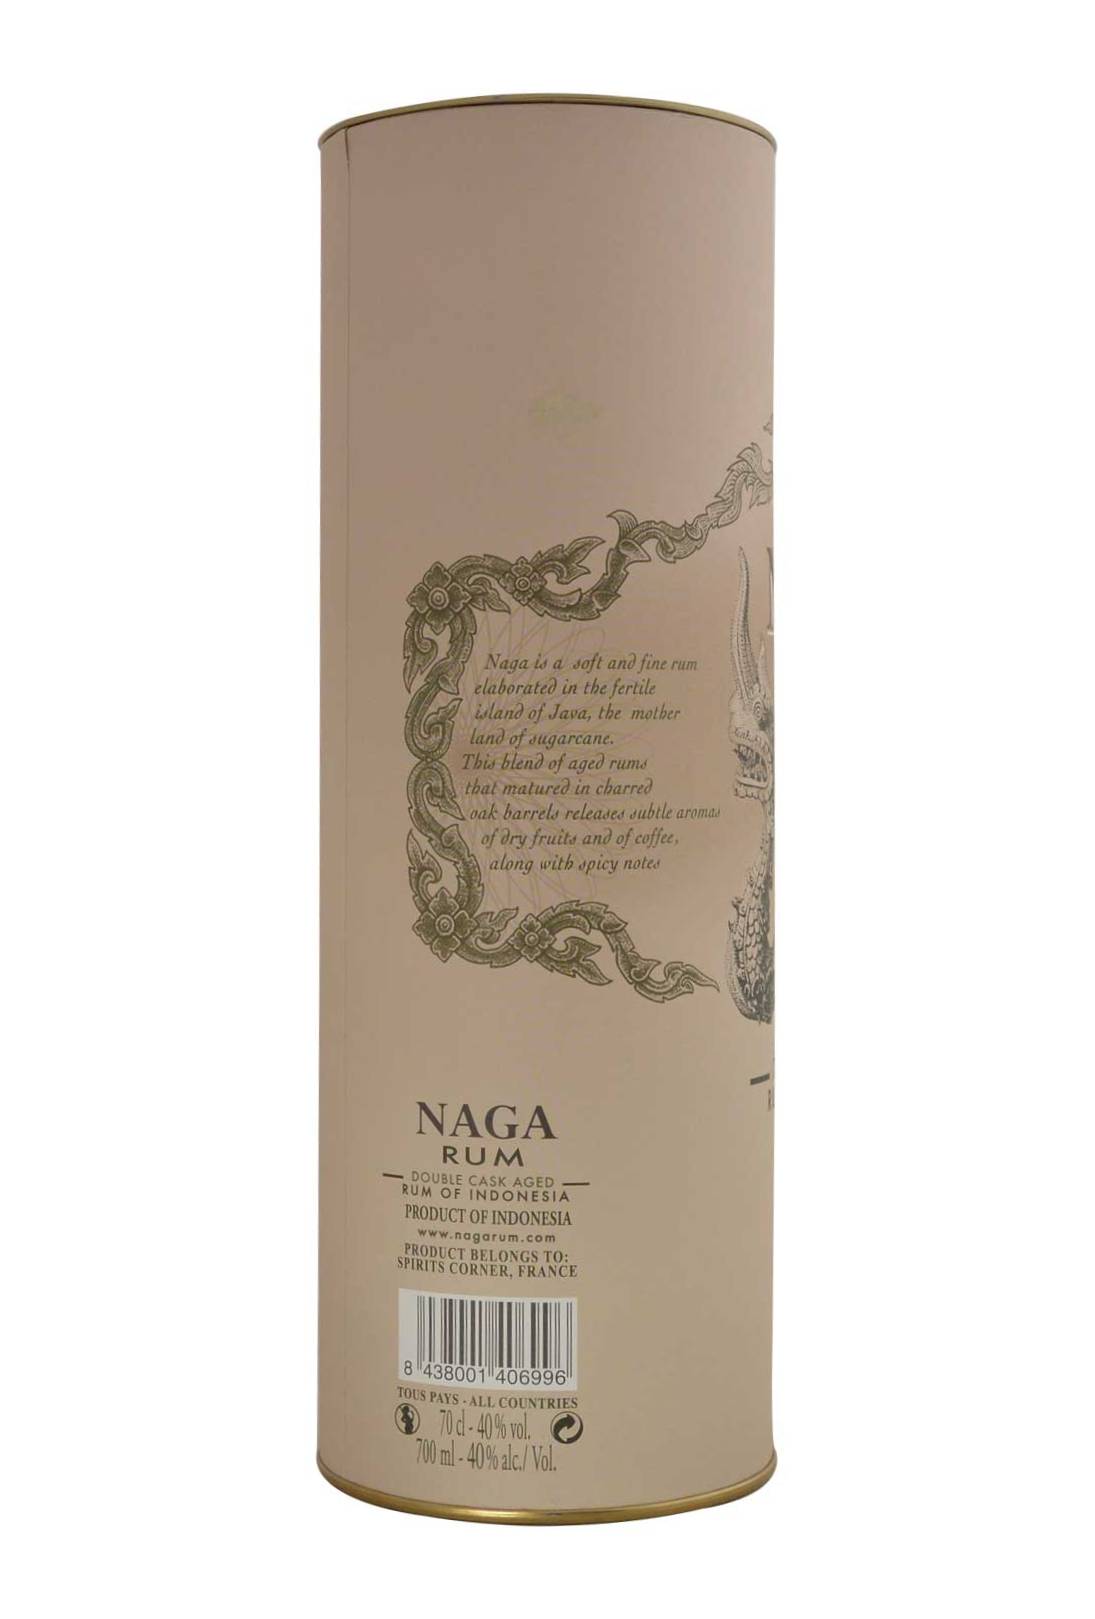 Naga Rum Double Cask Aged Rum